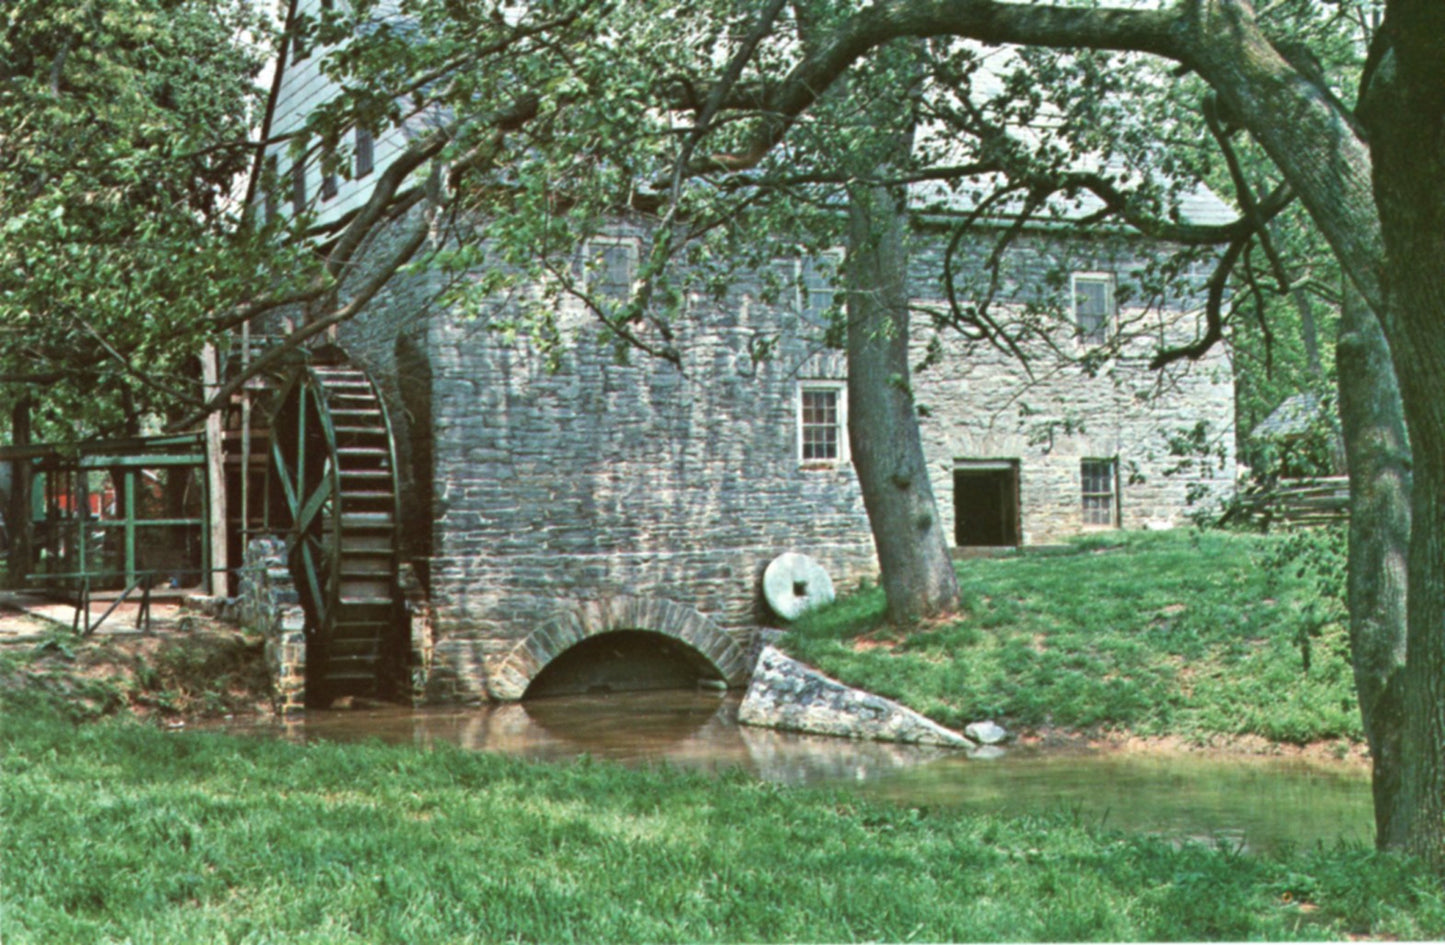 Mill Bridge Craft Village SOUDERSBURG PENNSYLVANIA Vintage Postcard